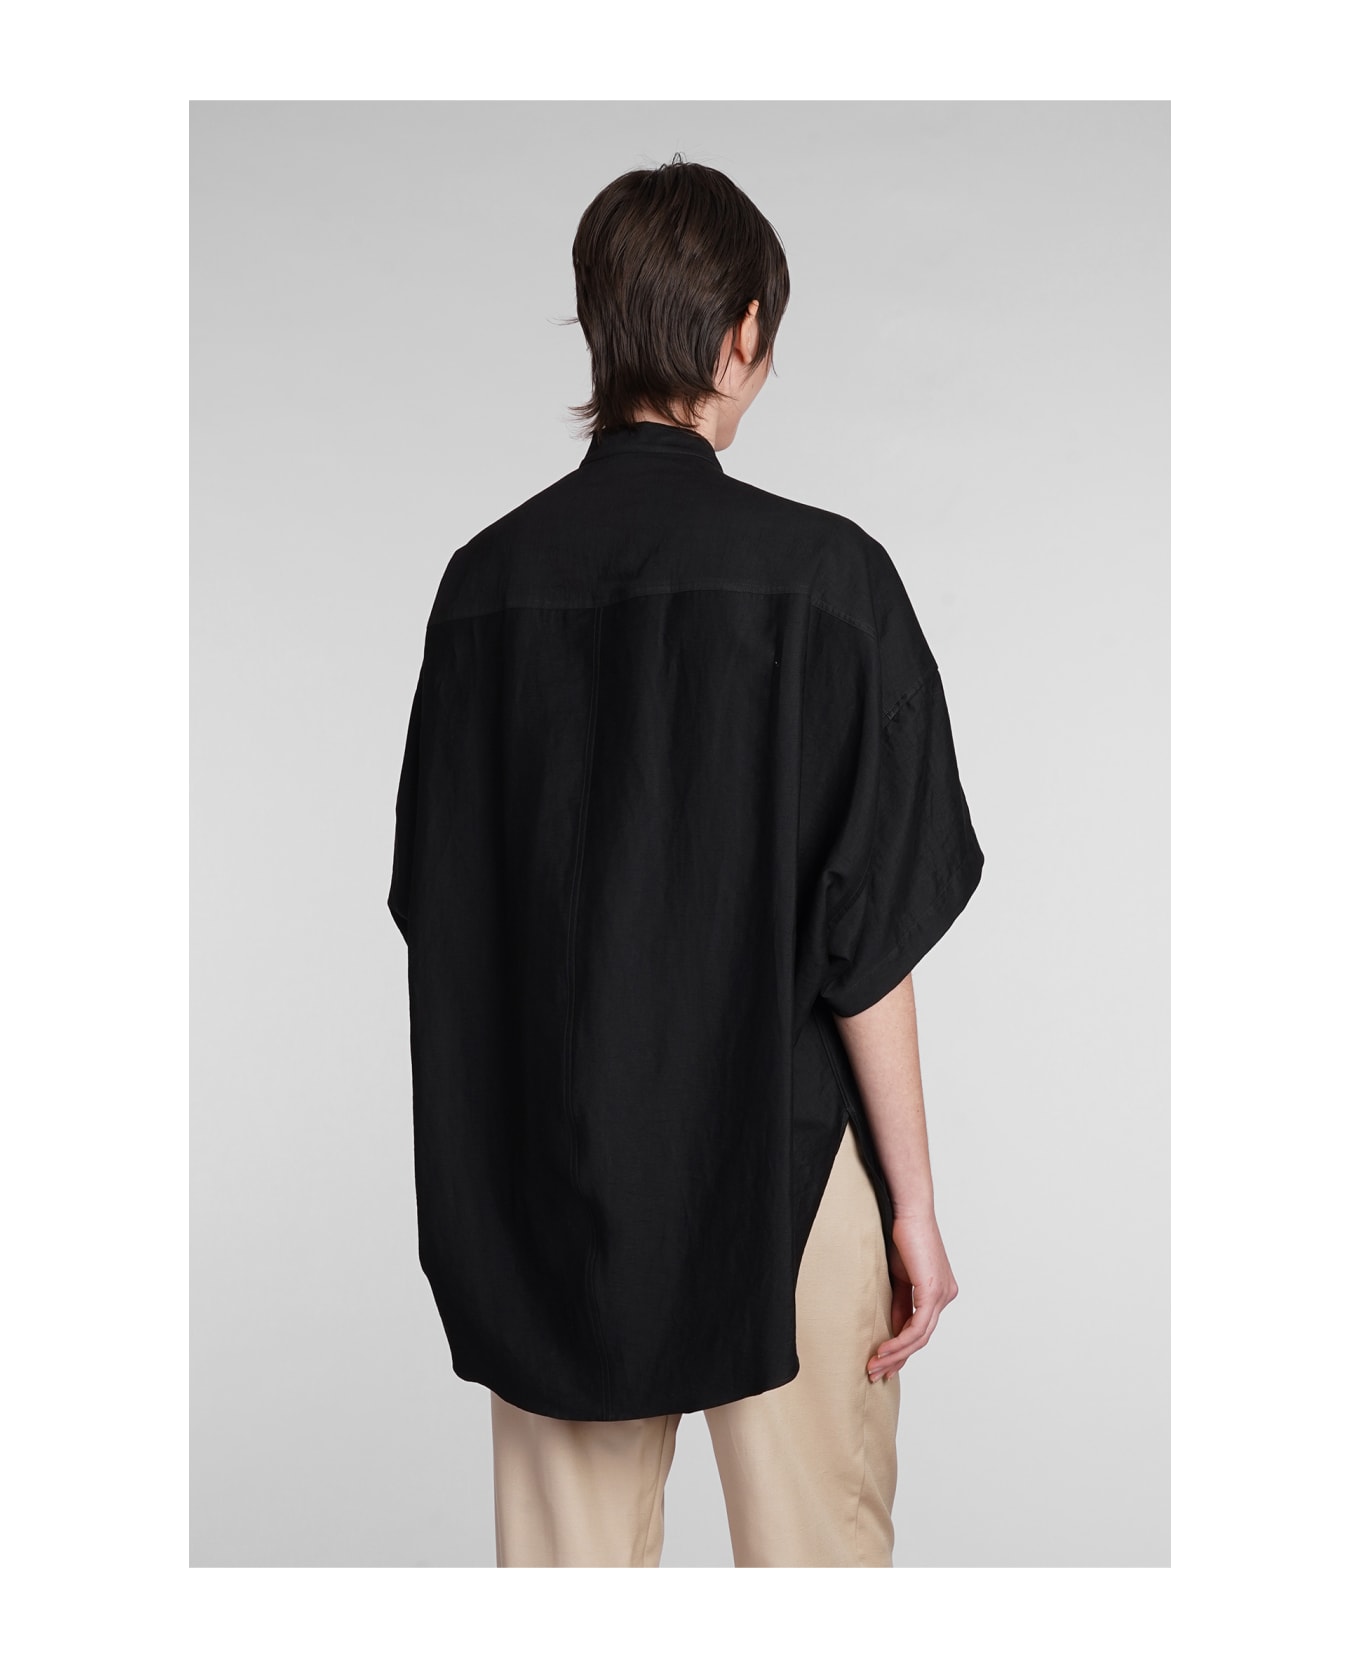 Stella McCartney Shirt In Black Linen - Black